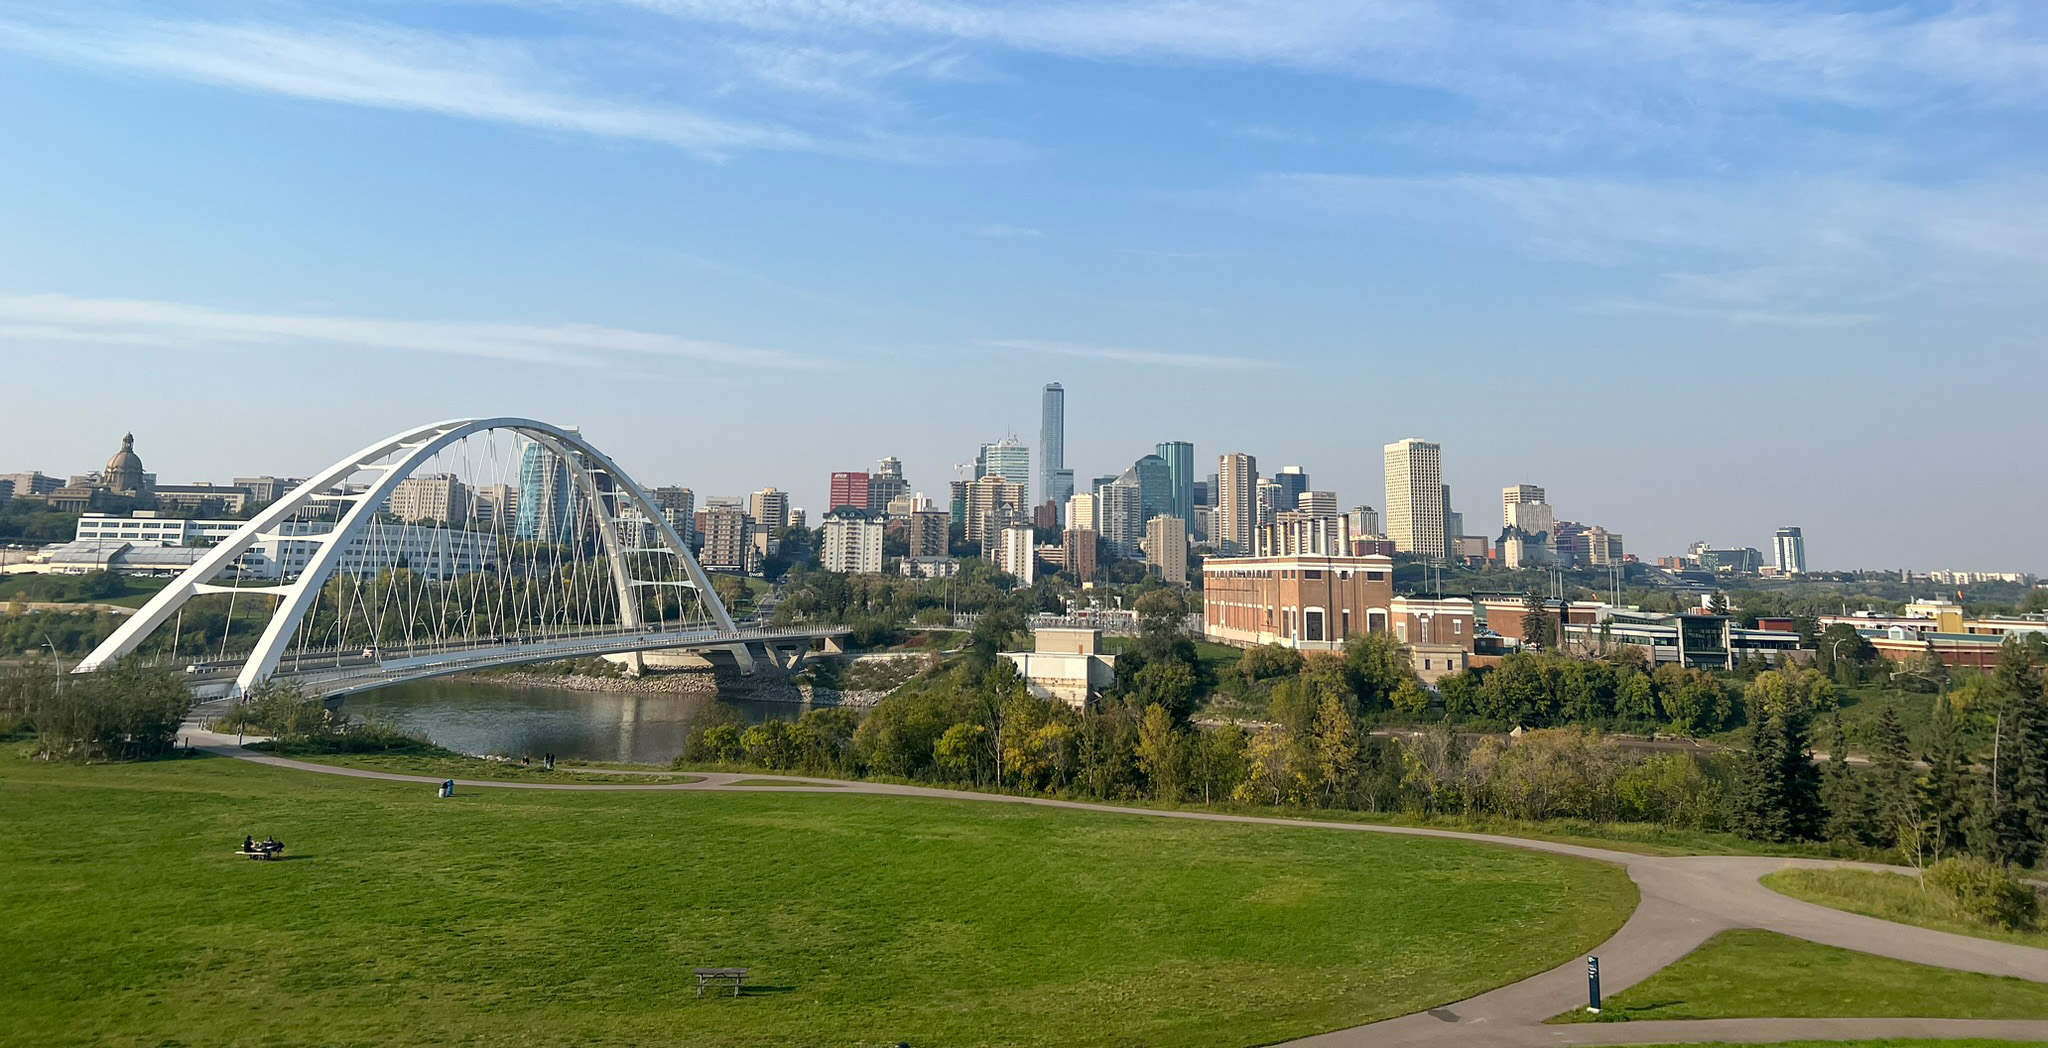 Panorama of the city of Edmonton